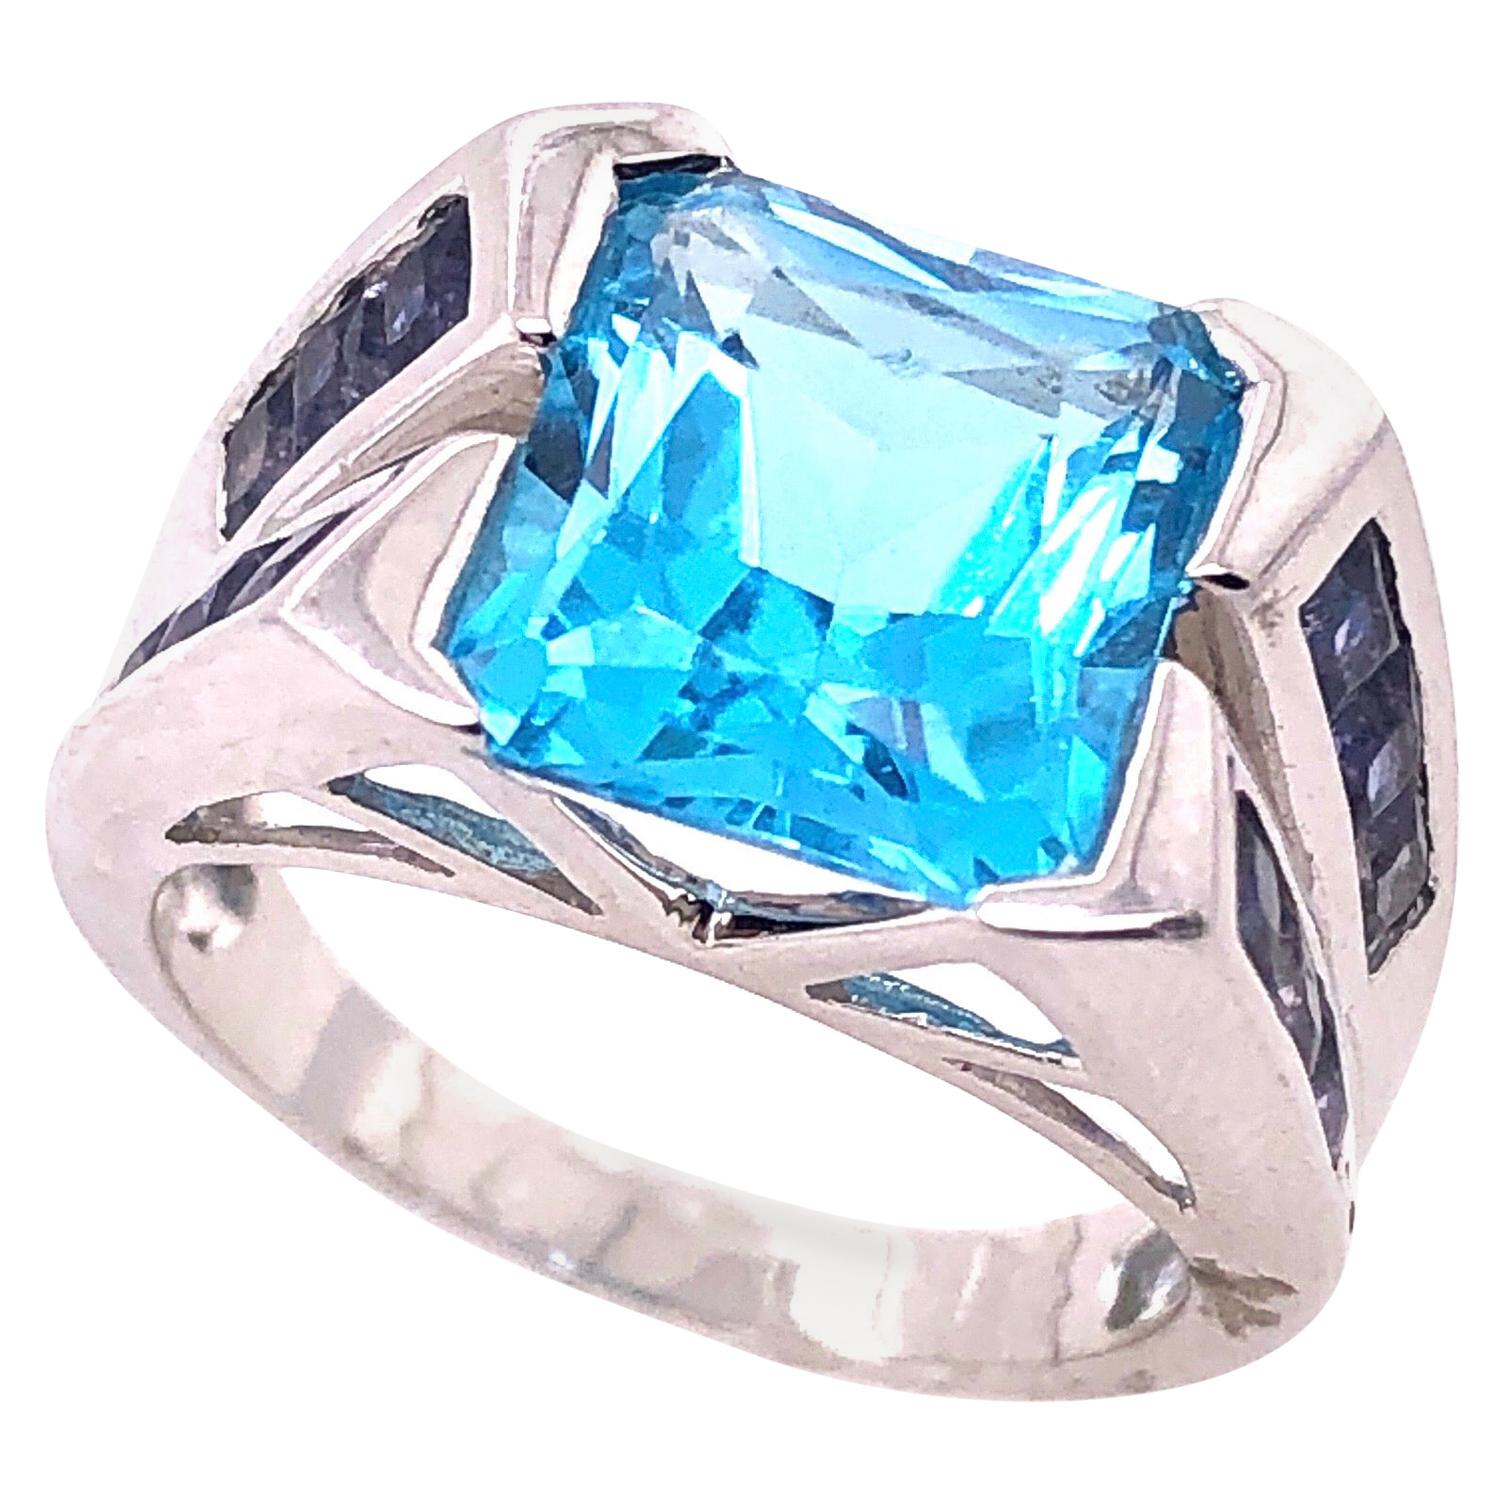 14 Karat White Gold and Blue Zirconium Ring